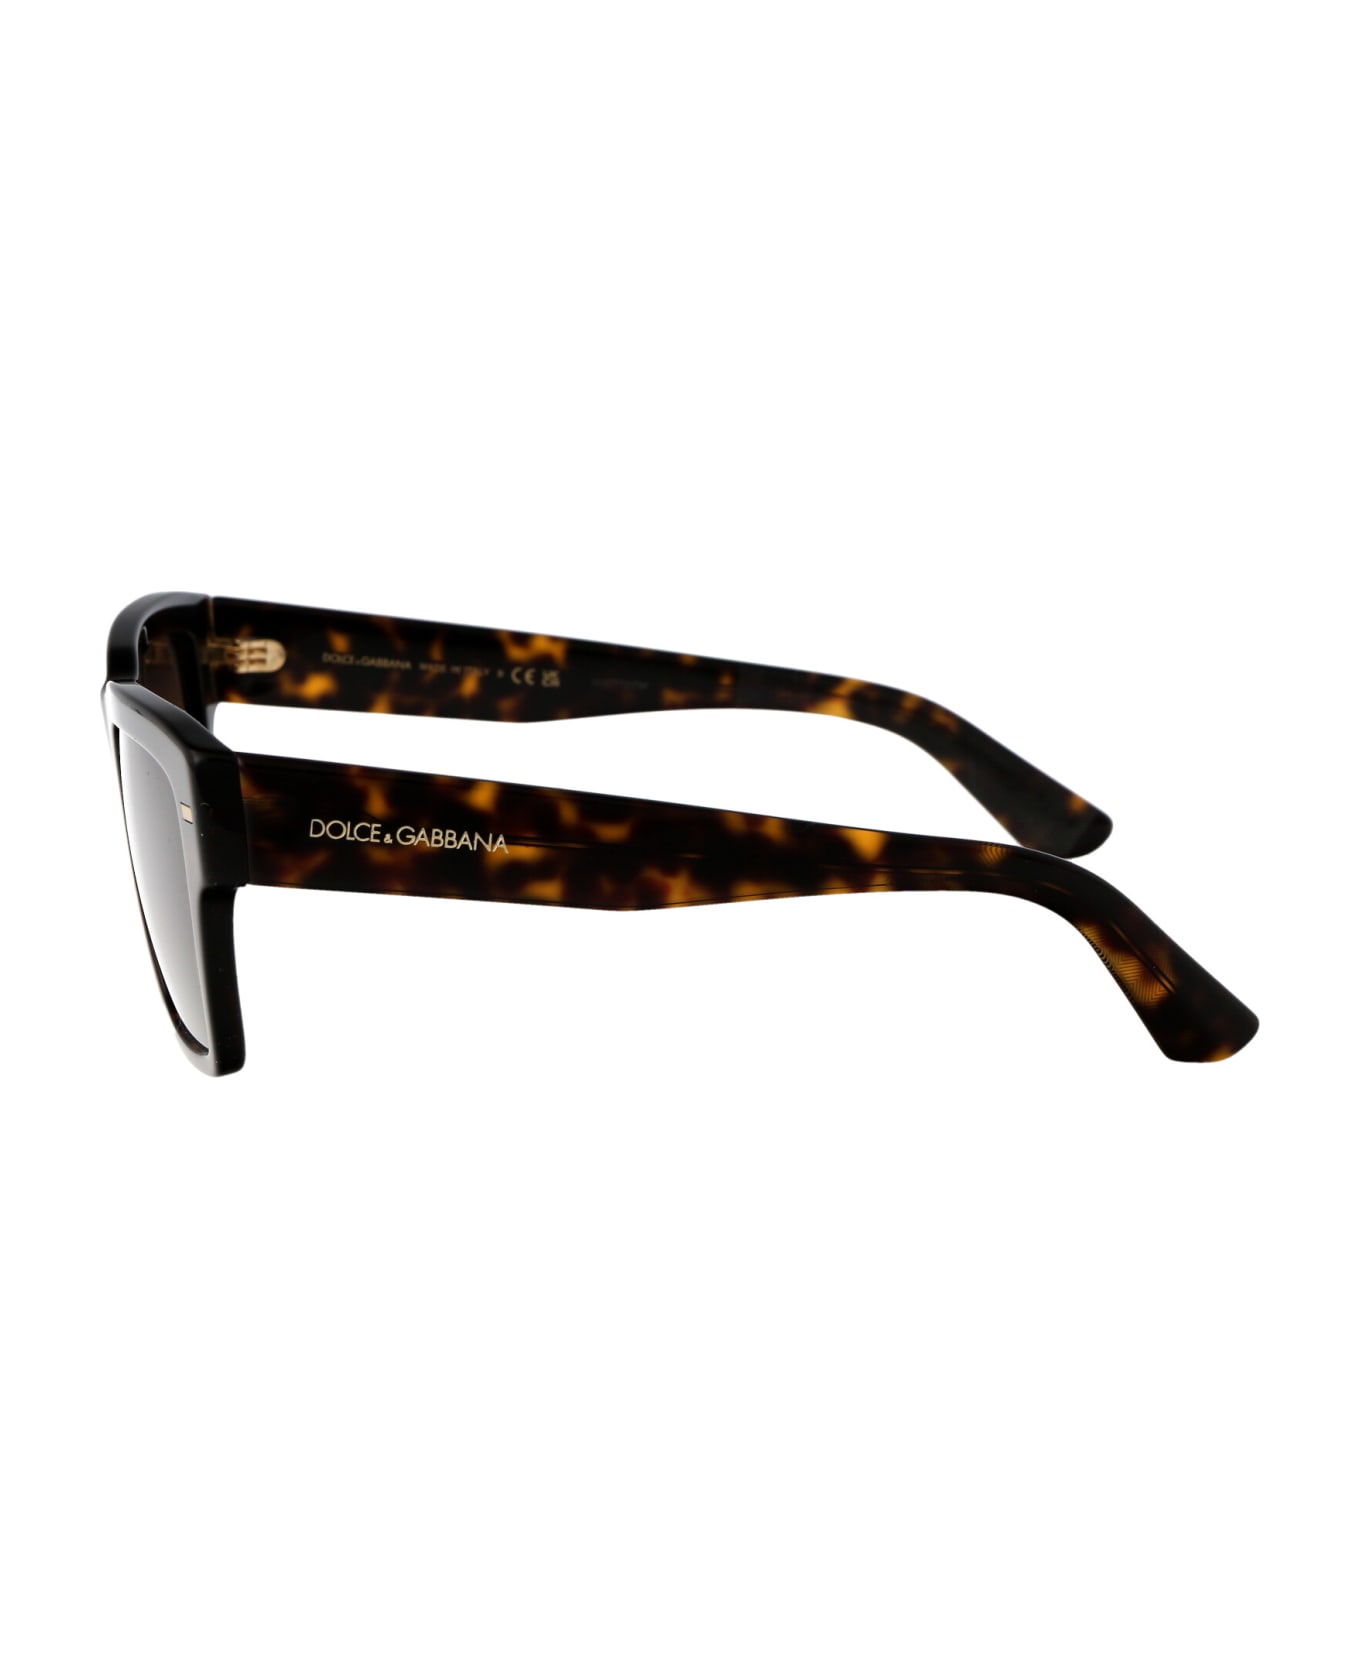 LATCH BETA SUNGLASSES OO9436 Eyewear 0dg4431 Sunglasses - 502/73 HAVANA